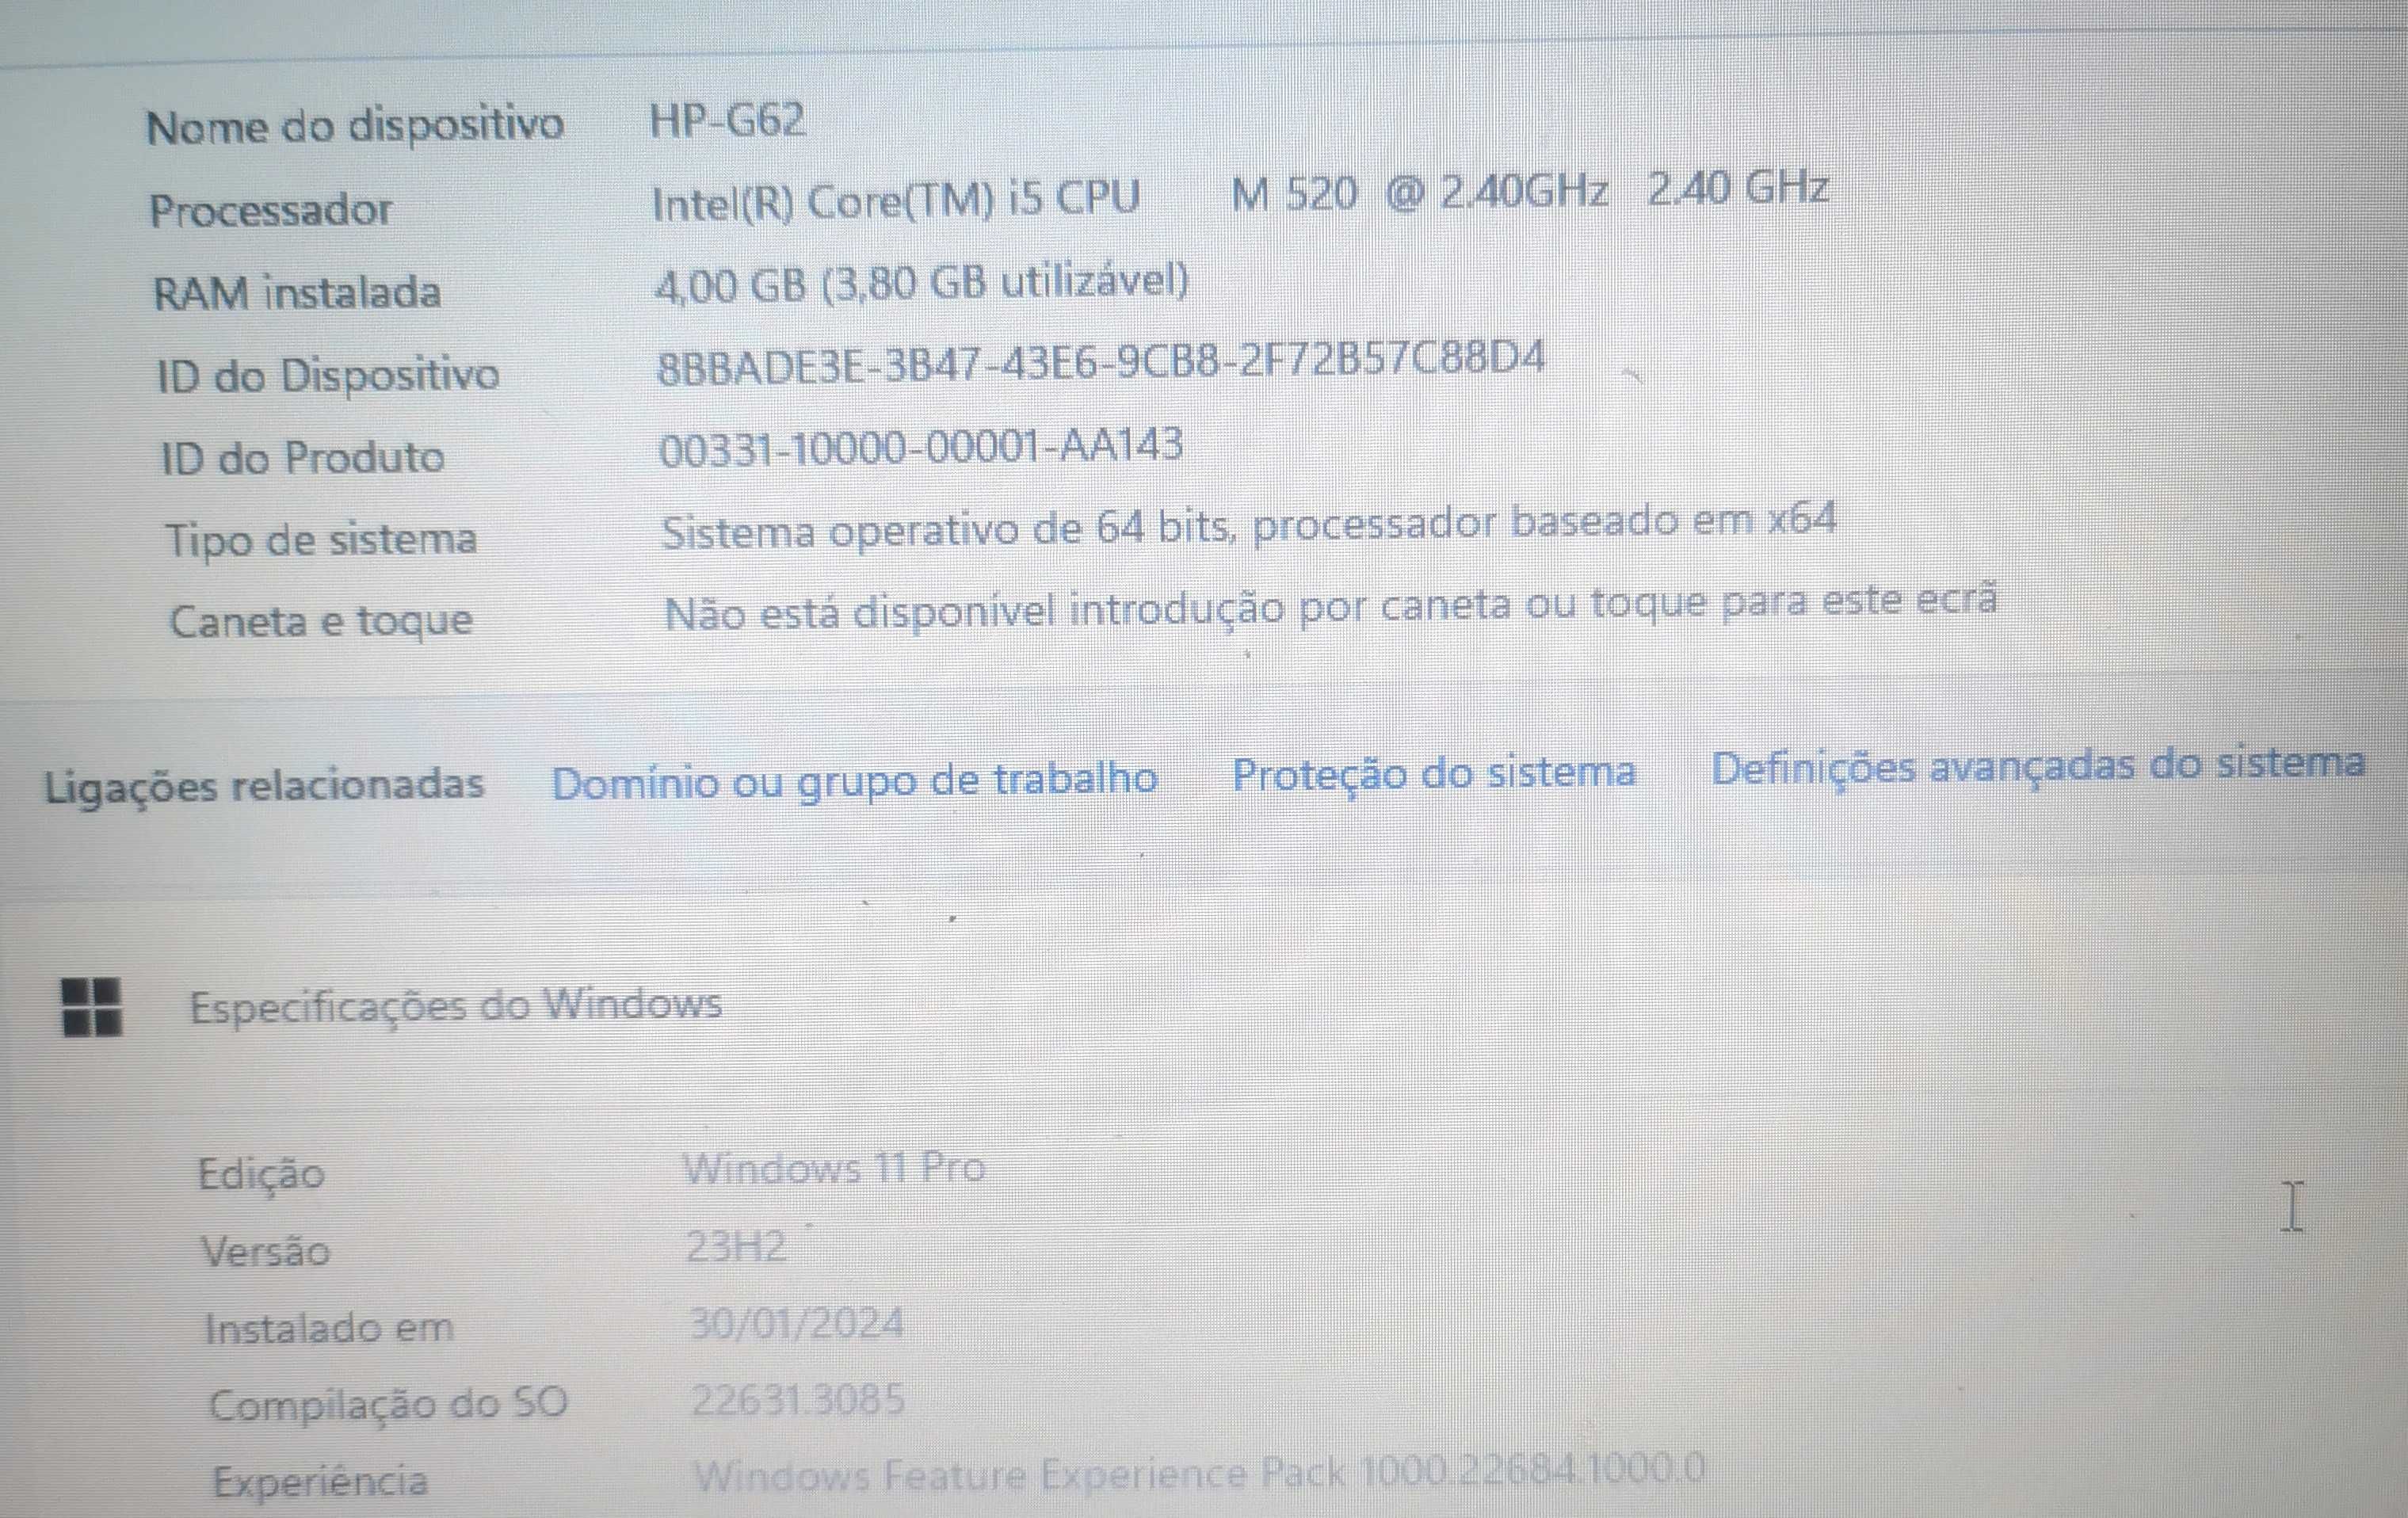 Portátil HP G62, Cpu I5, 4 Gb DDRIII, HDD Sata 750Gb, Windows 11